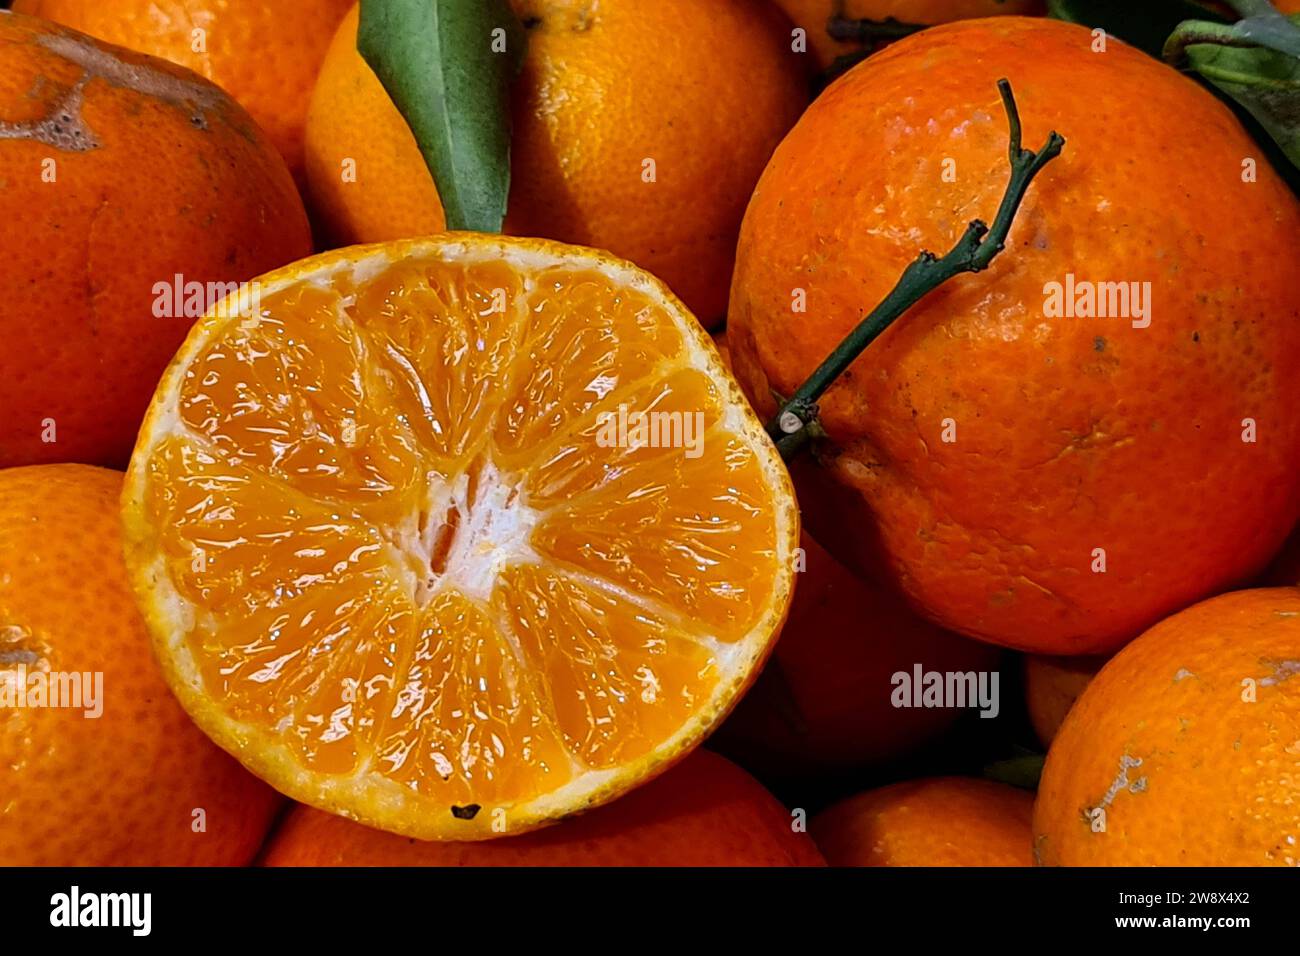 Mandarinen hi-res stock - and Alamy images photography